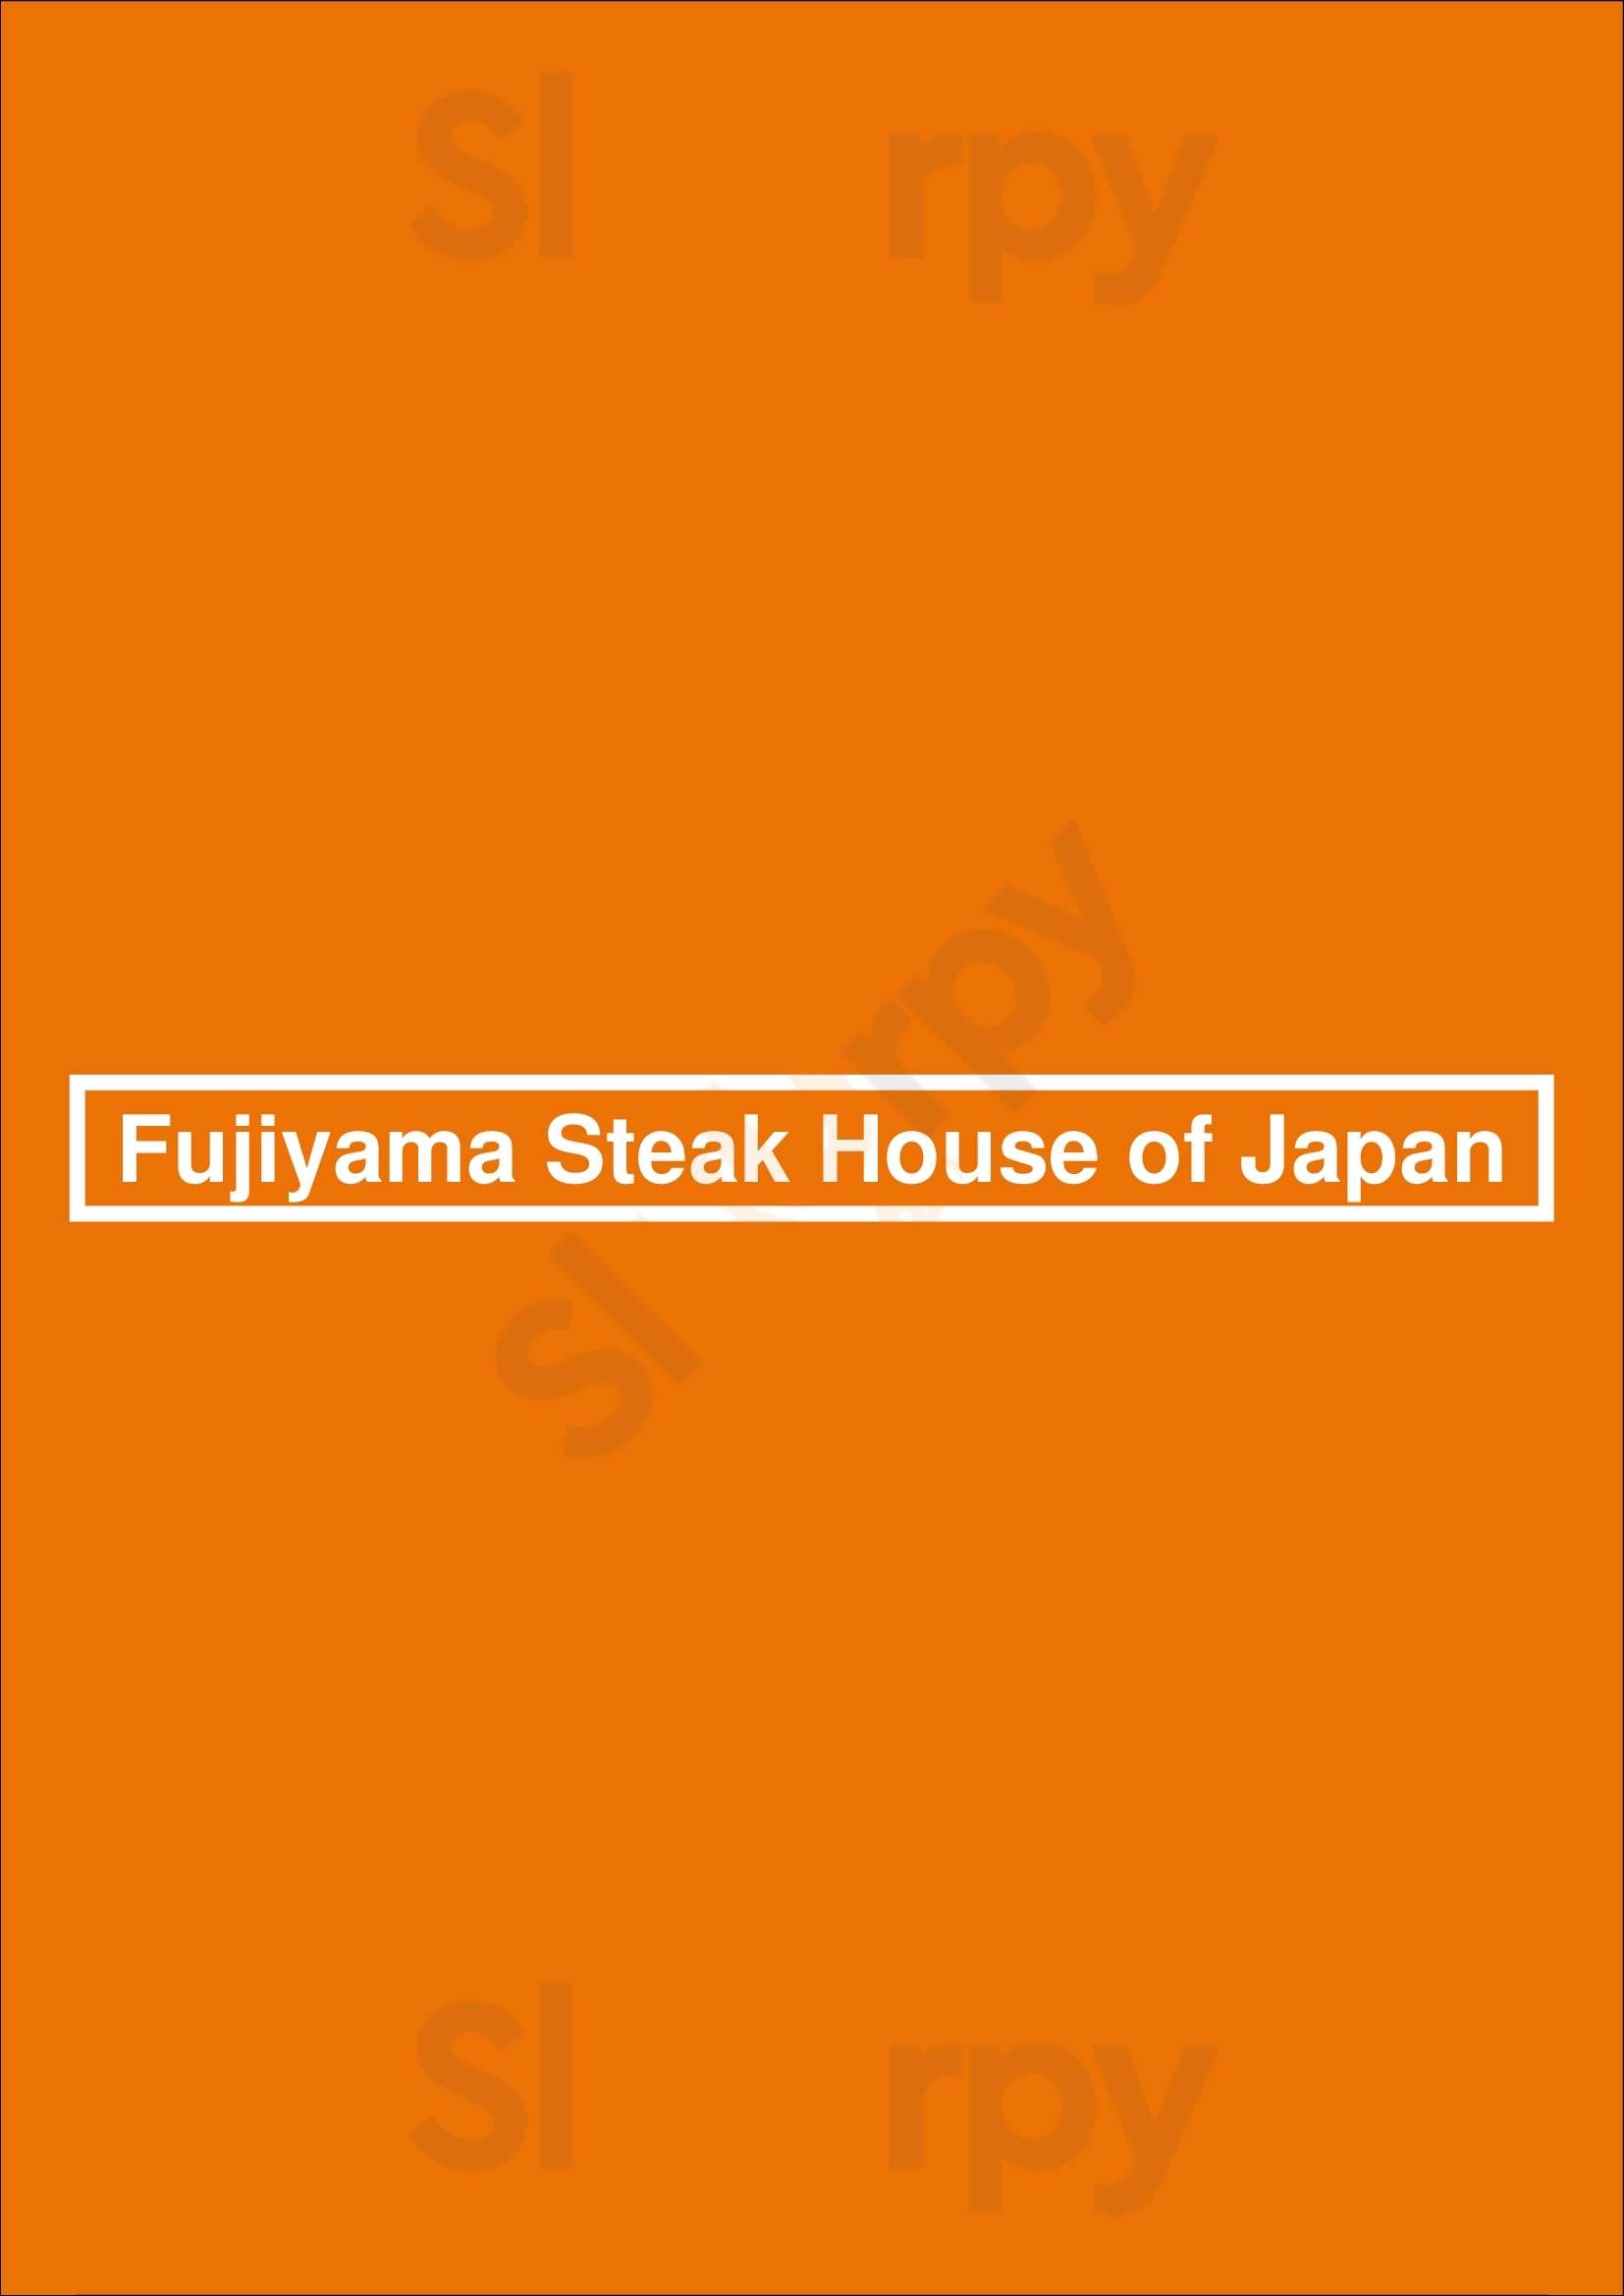 Fujiyama Steak House Of Japan Indianapolis Menu - 1